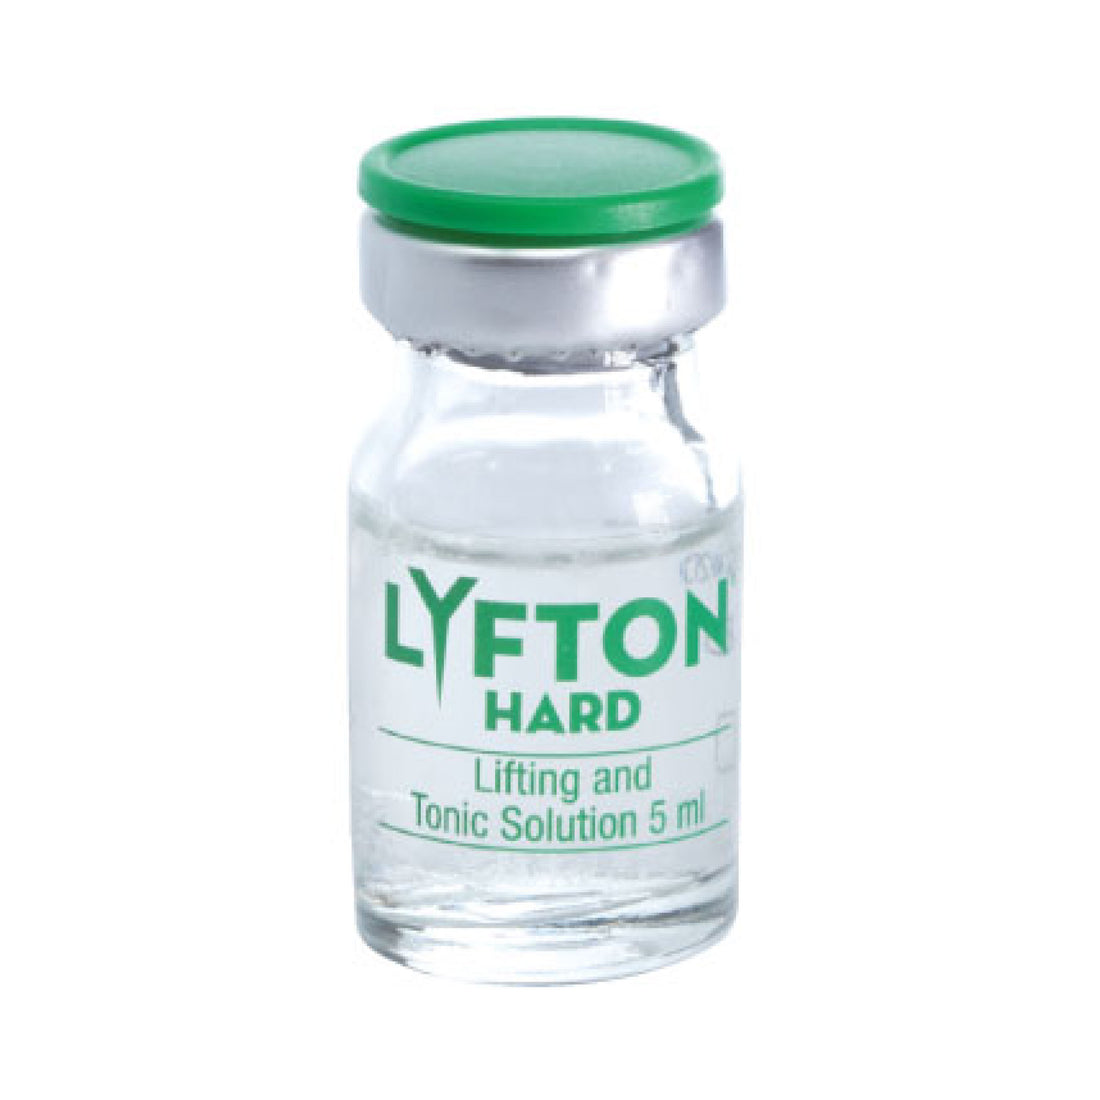 LYFTON HARD - Lifting and Toning Solution - Aerazen Lab.